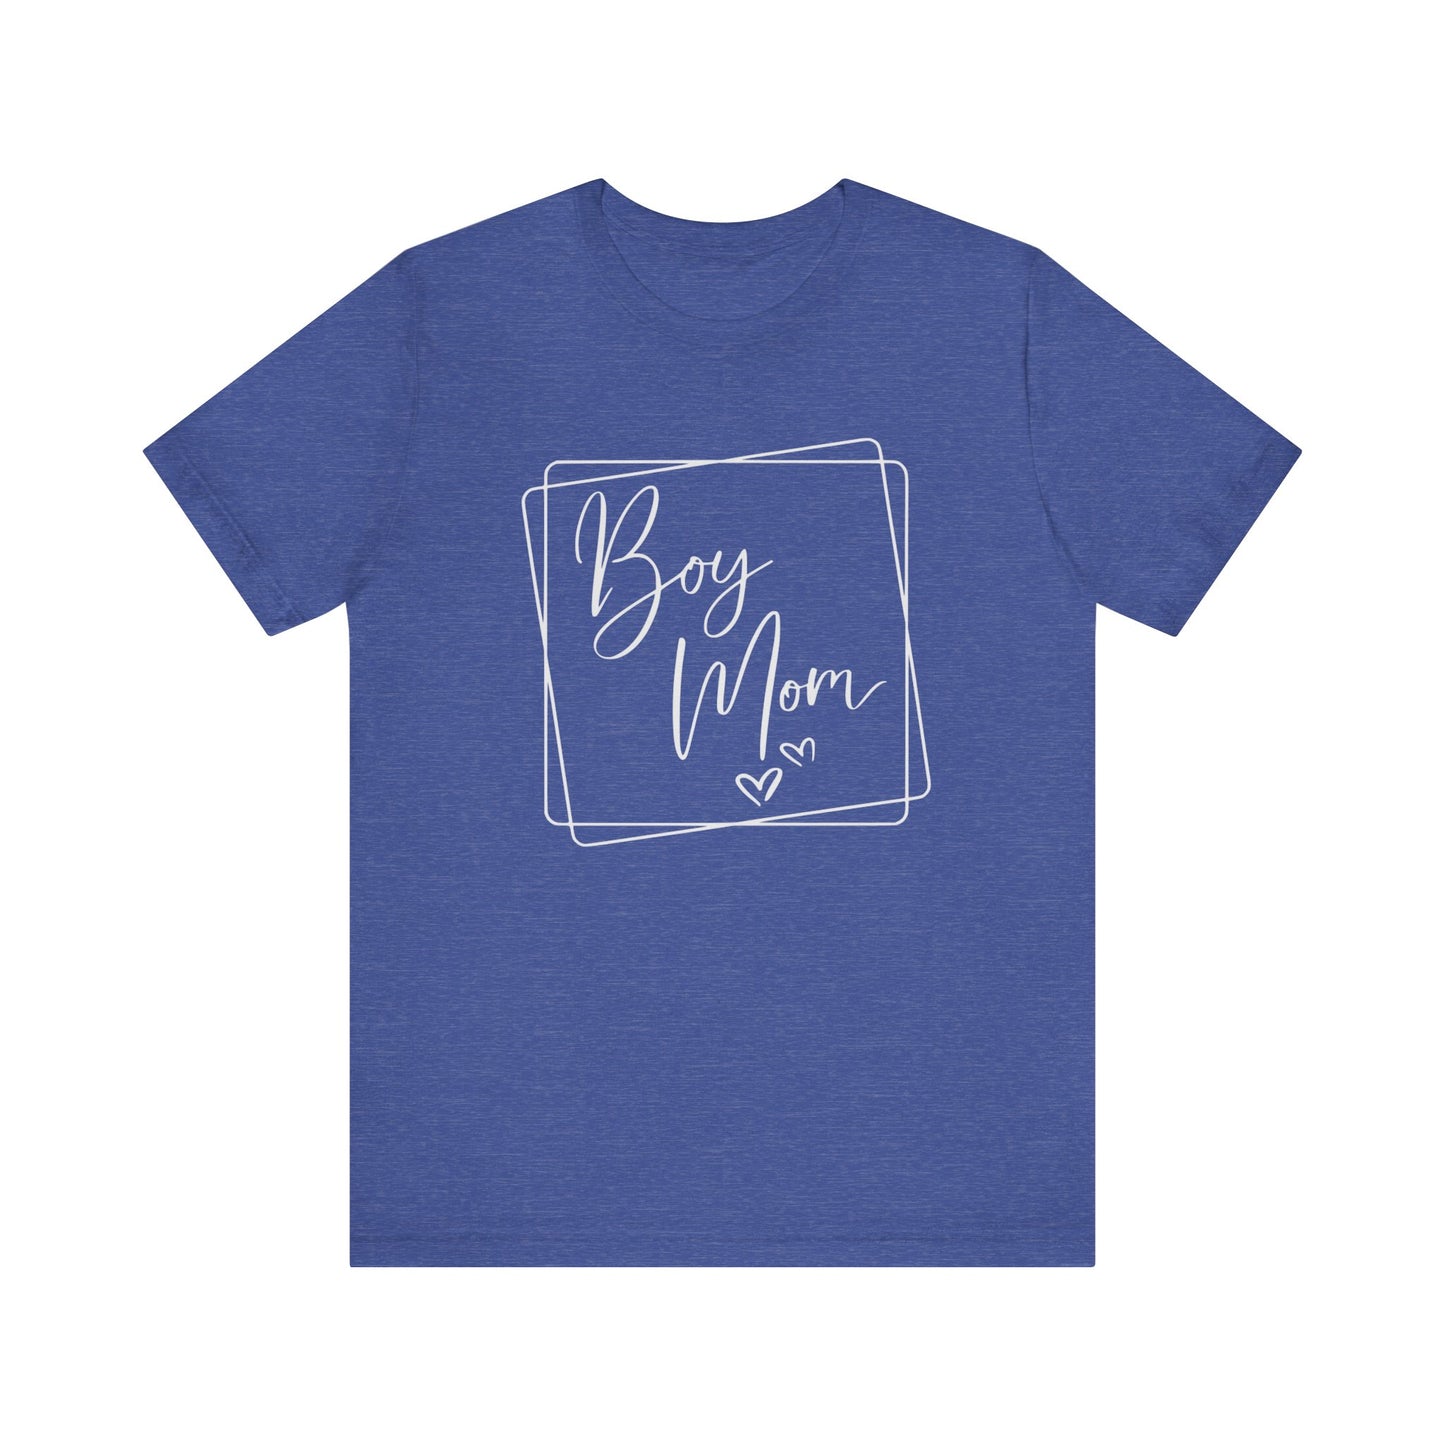 "Boy Mom T-Shirt with Heart Design"